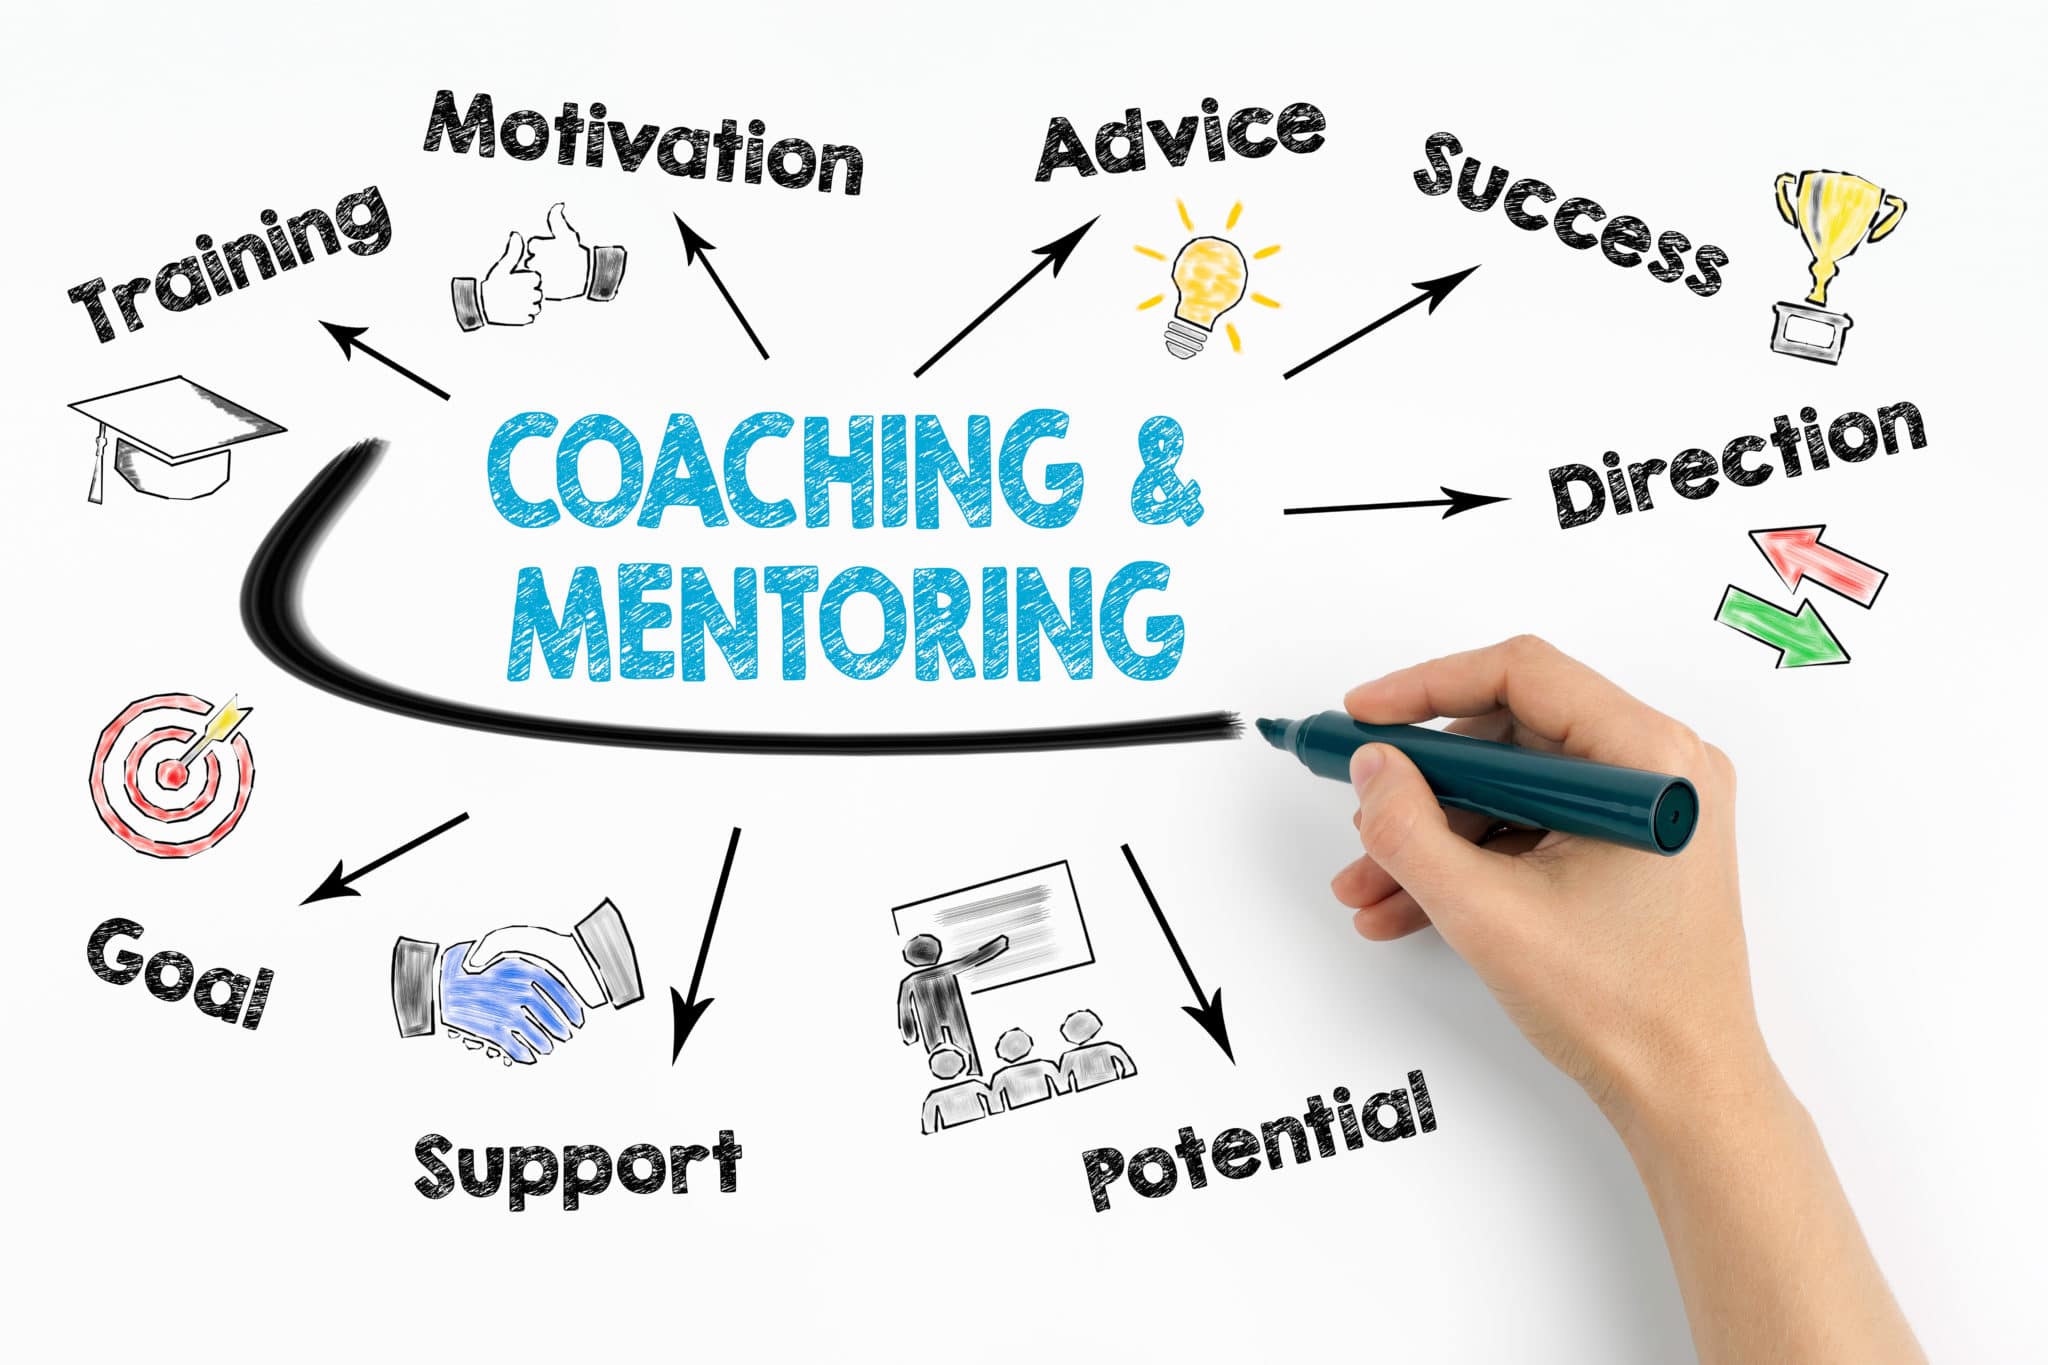 online coaching business plan